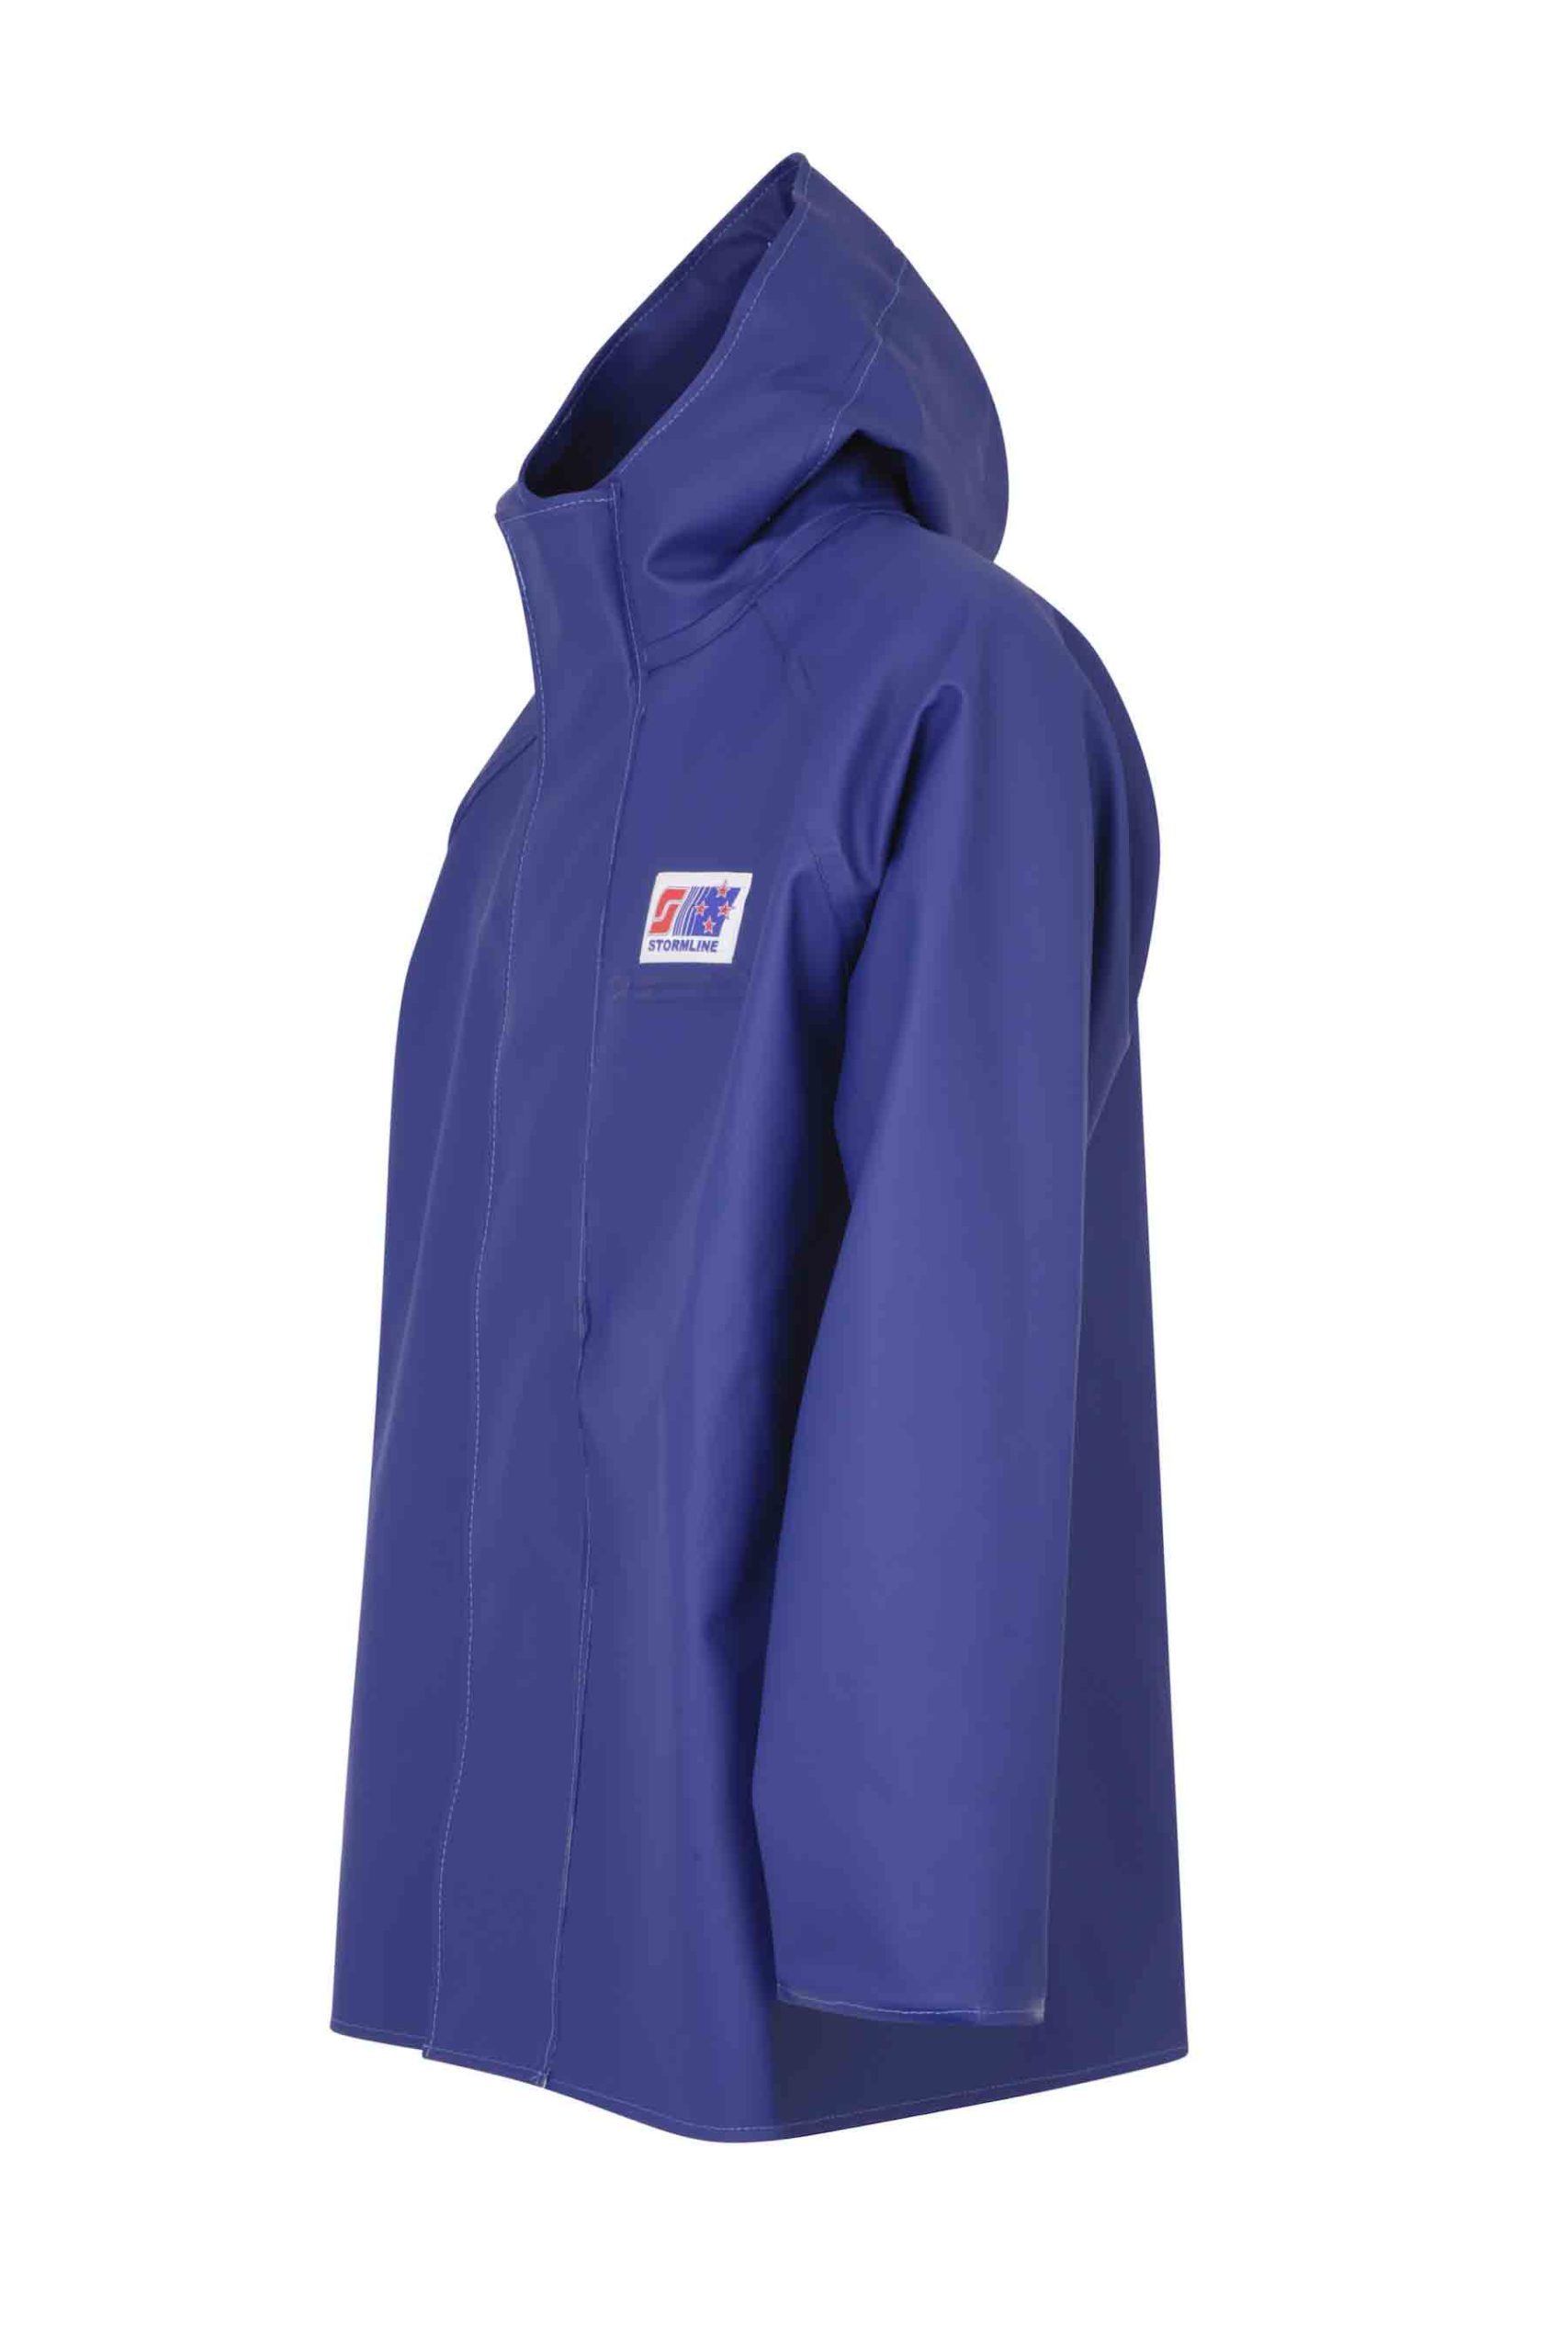 Stormtex 248B Midweight PVC Waterproof Workwear Jacket (Size: M)